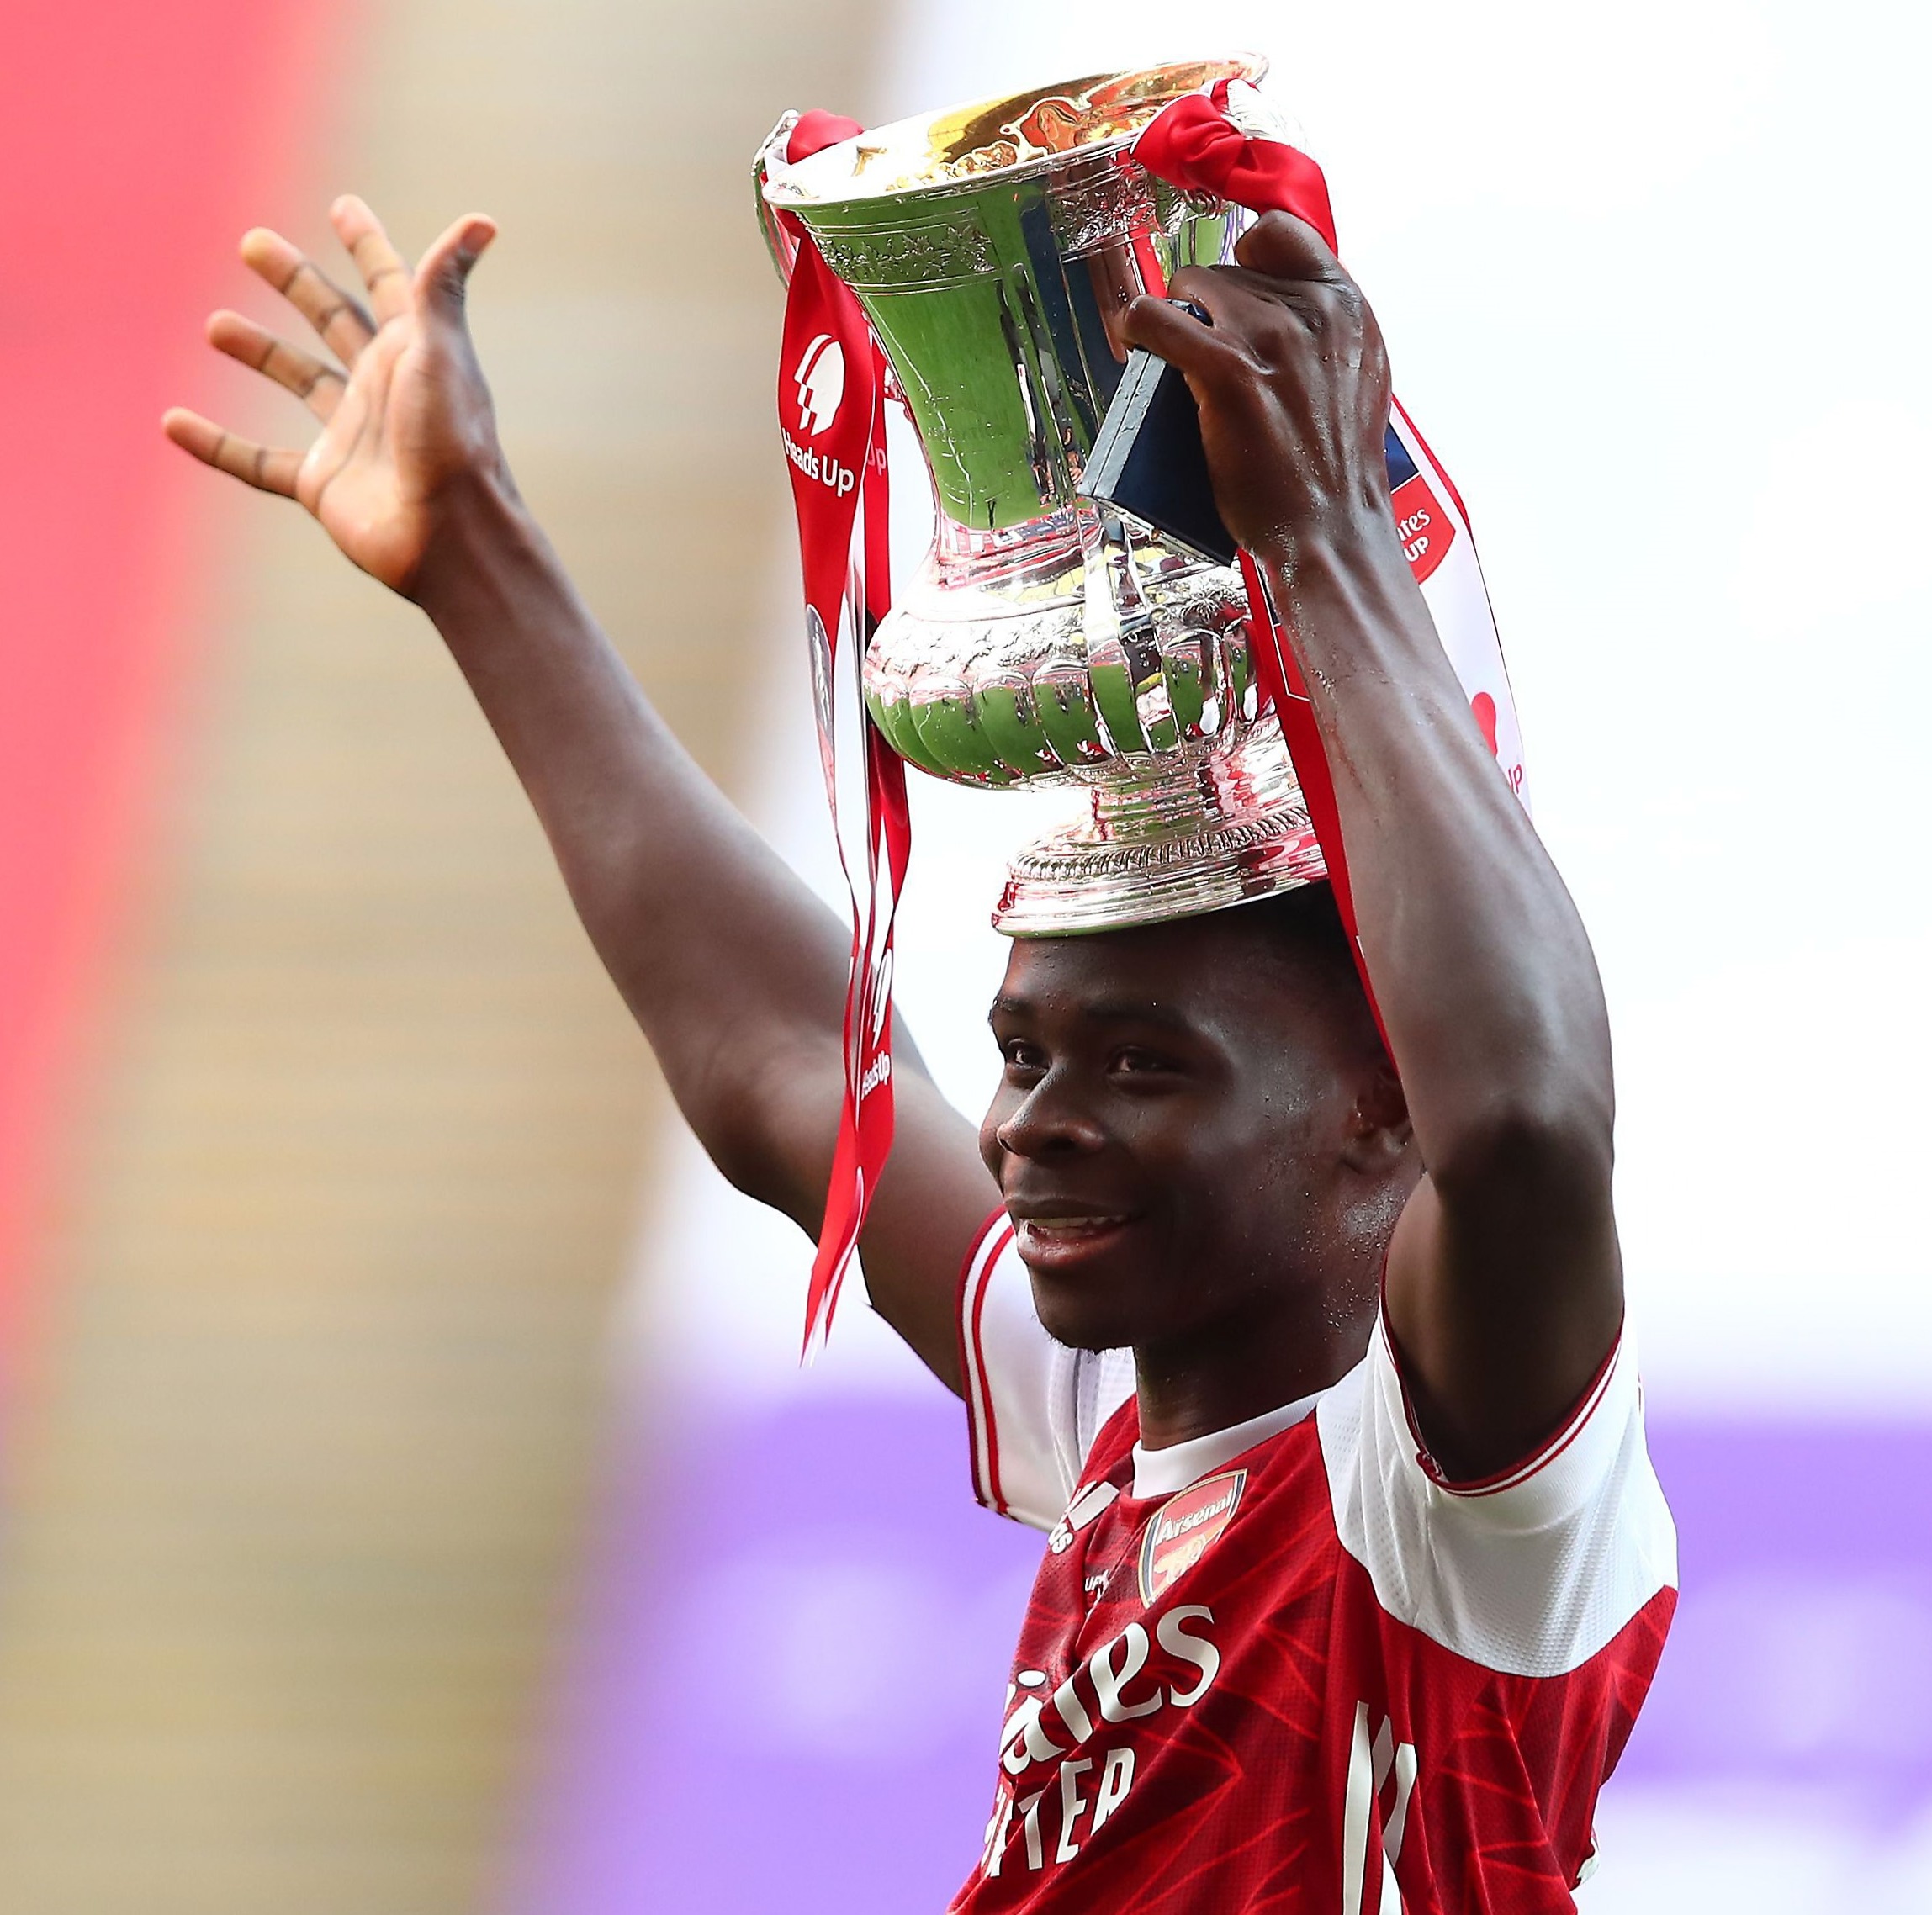 Saka half Arsenal, den FA Cup 2020 zu gewinnen